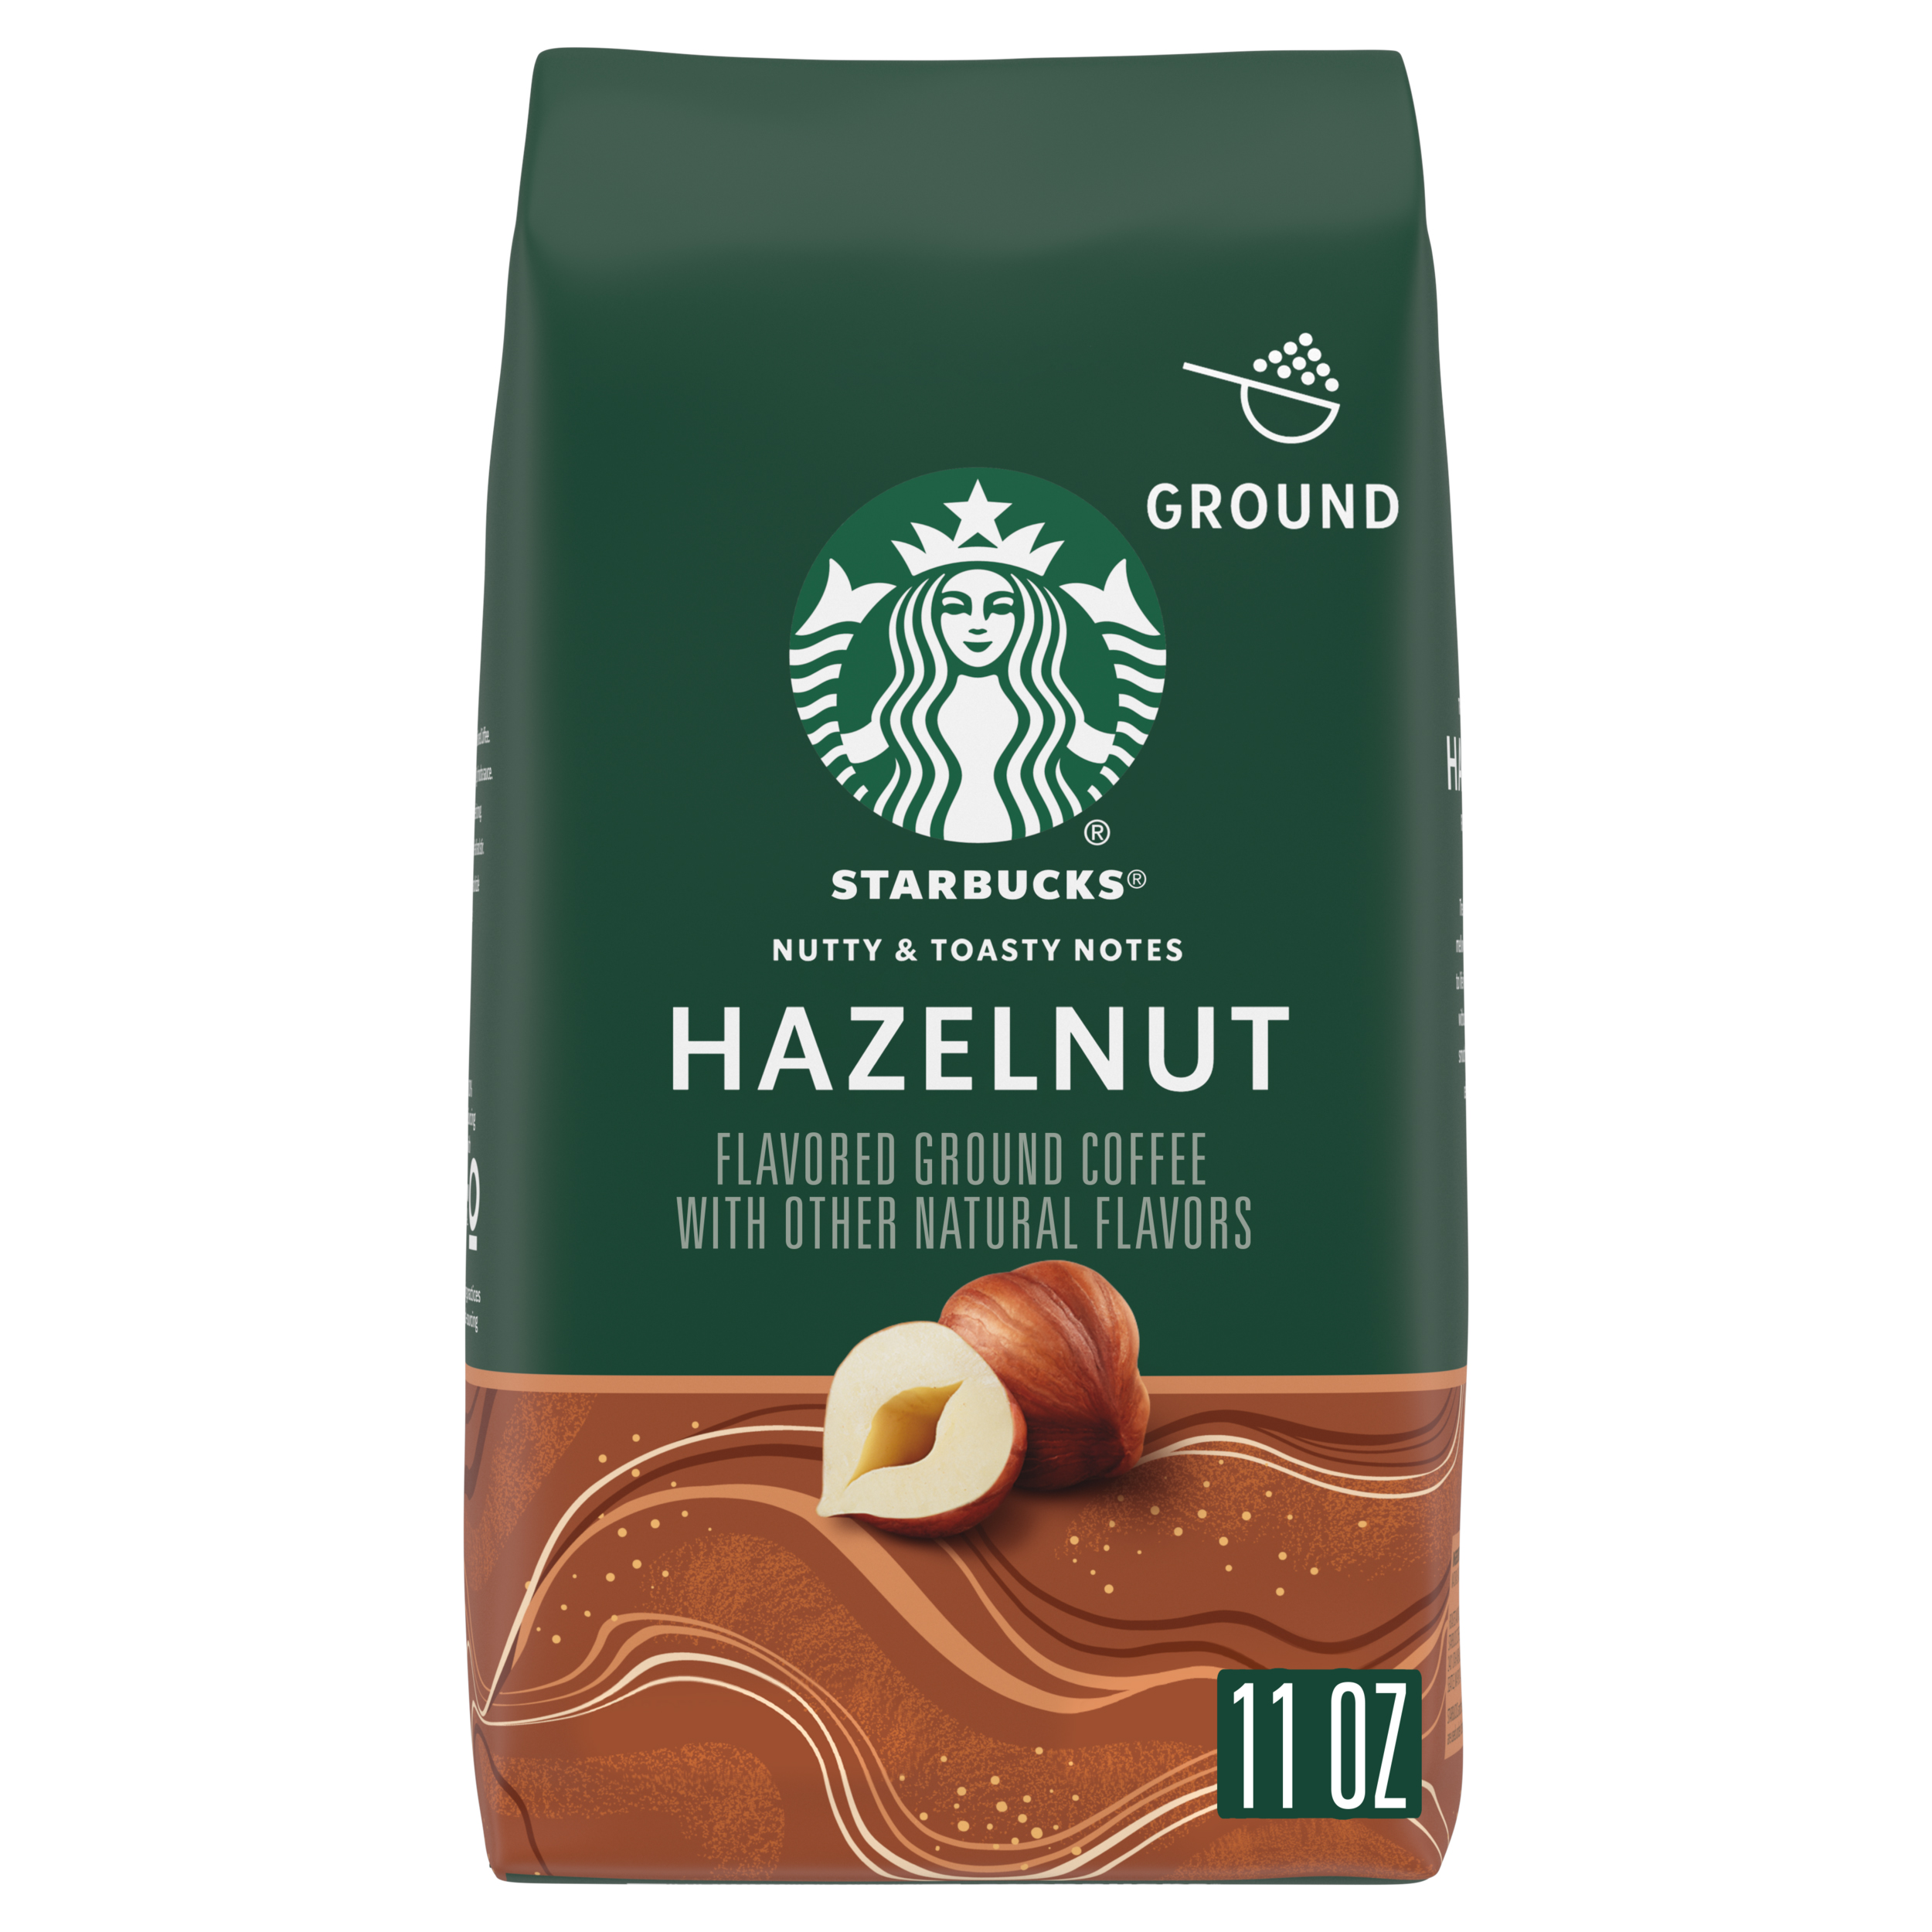 Starbucks Hazelnut Flavored Coffee, Ground Coffee, Naturally Flavored, 11 oz - image 1 of 8